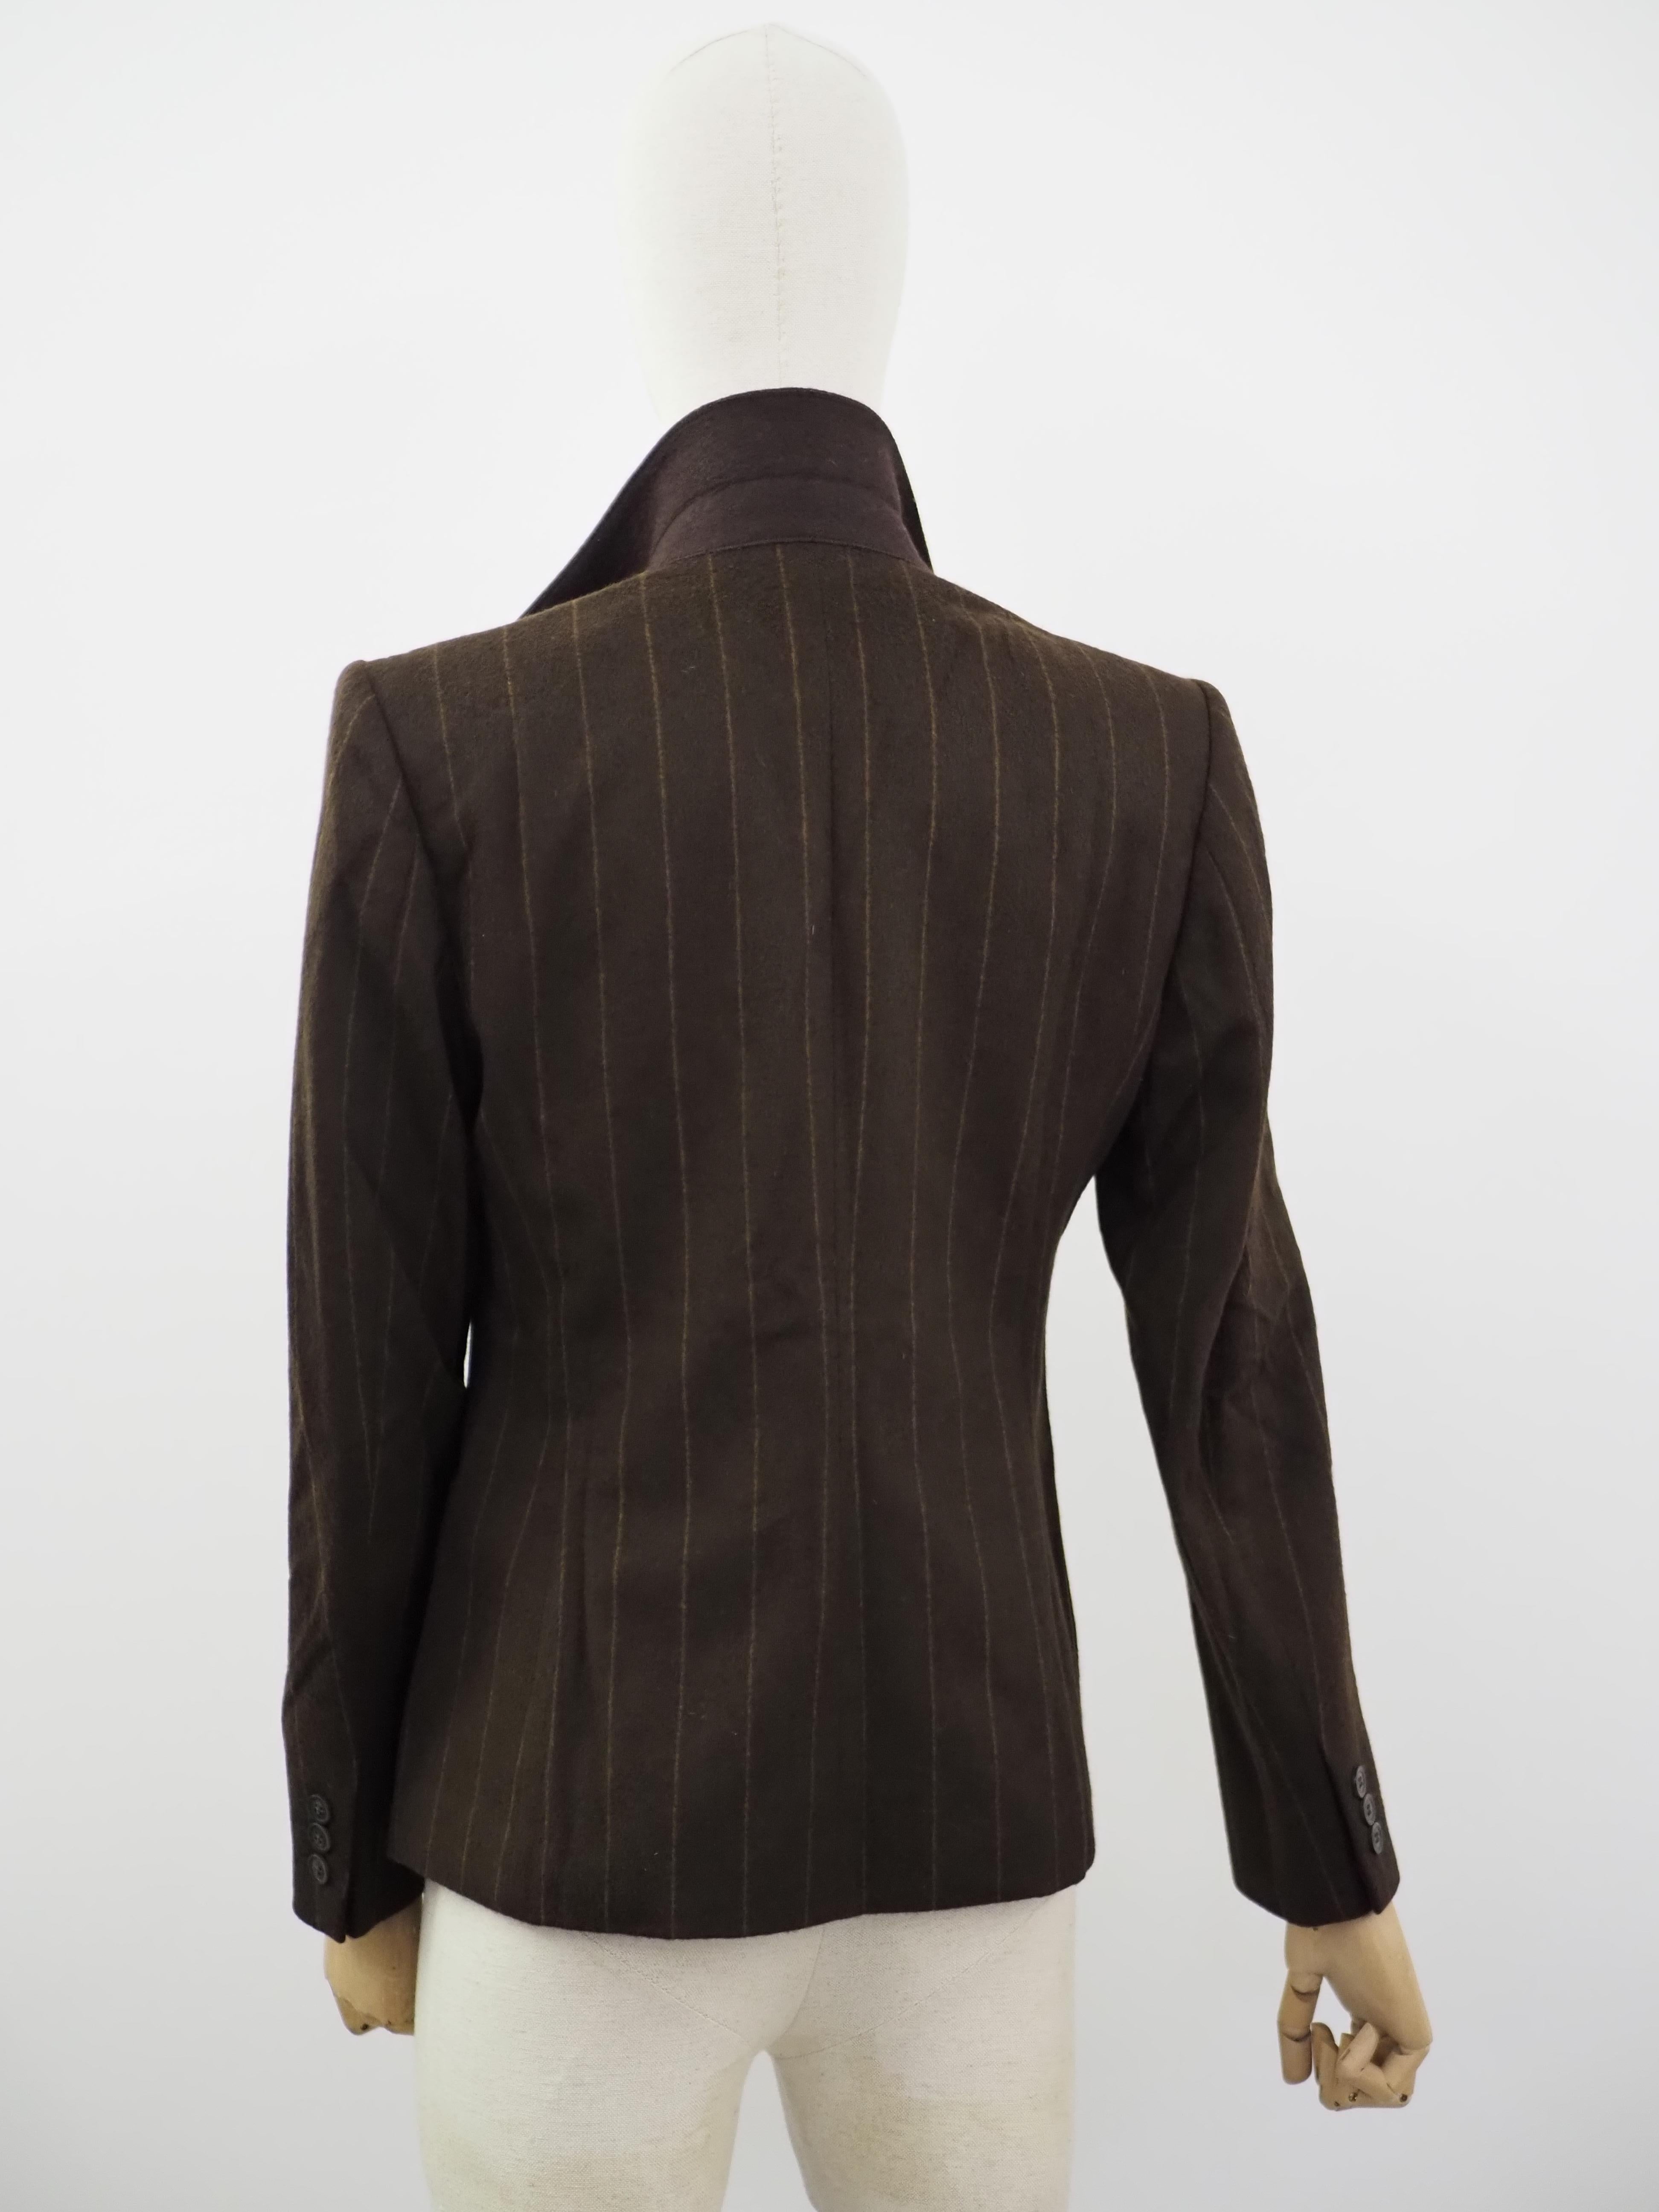 Max Mara brown wool jacket For Sale 2